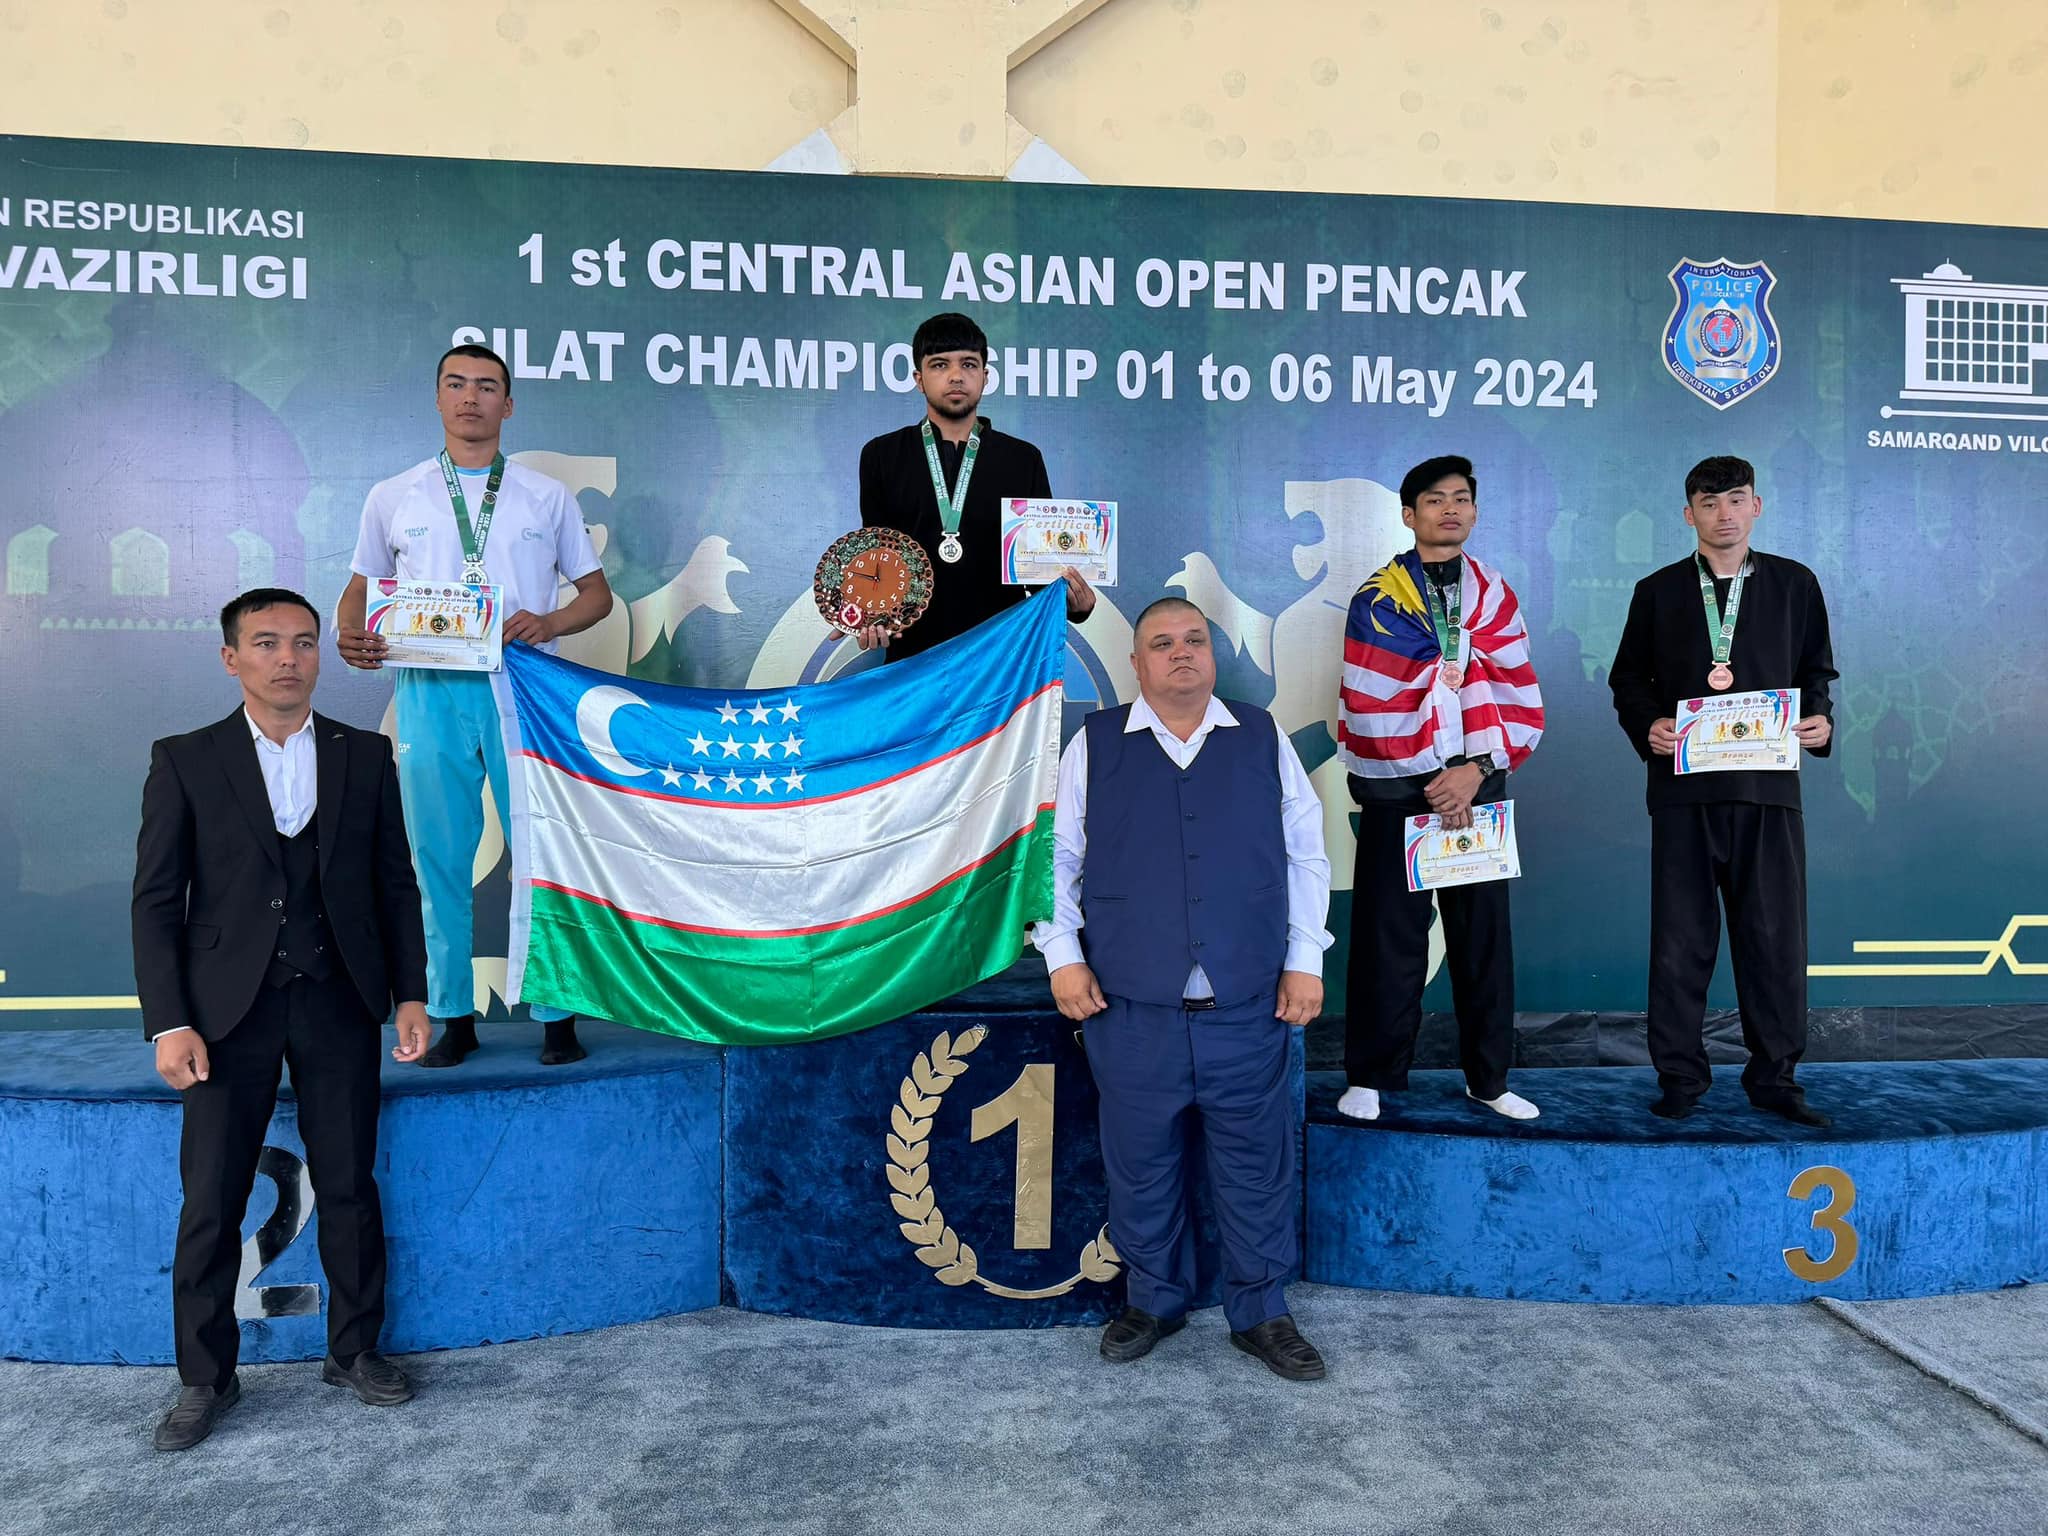 1st Central Asian Open Pencak Silat Championship 2024, Samarkand, Uzbekistan